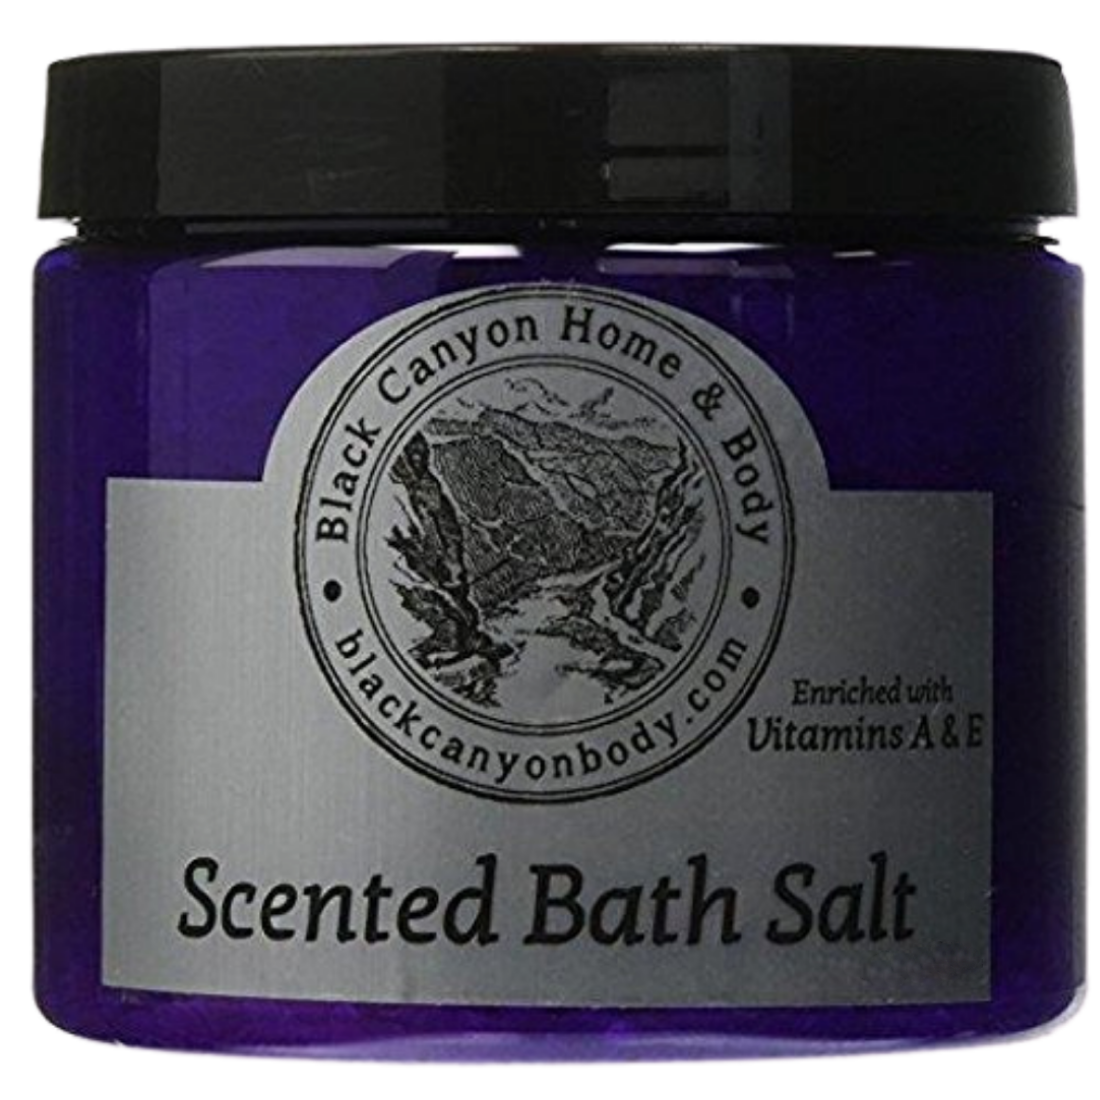 Black Canyon Lemon Tart Scented Sea Salt Bath Soak